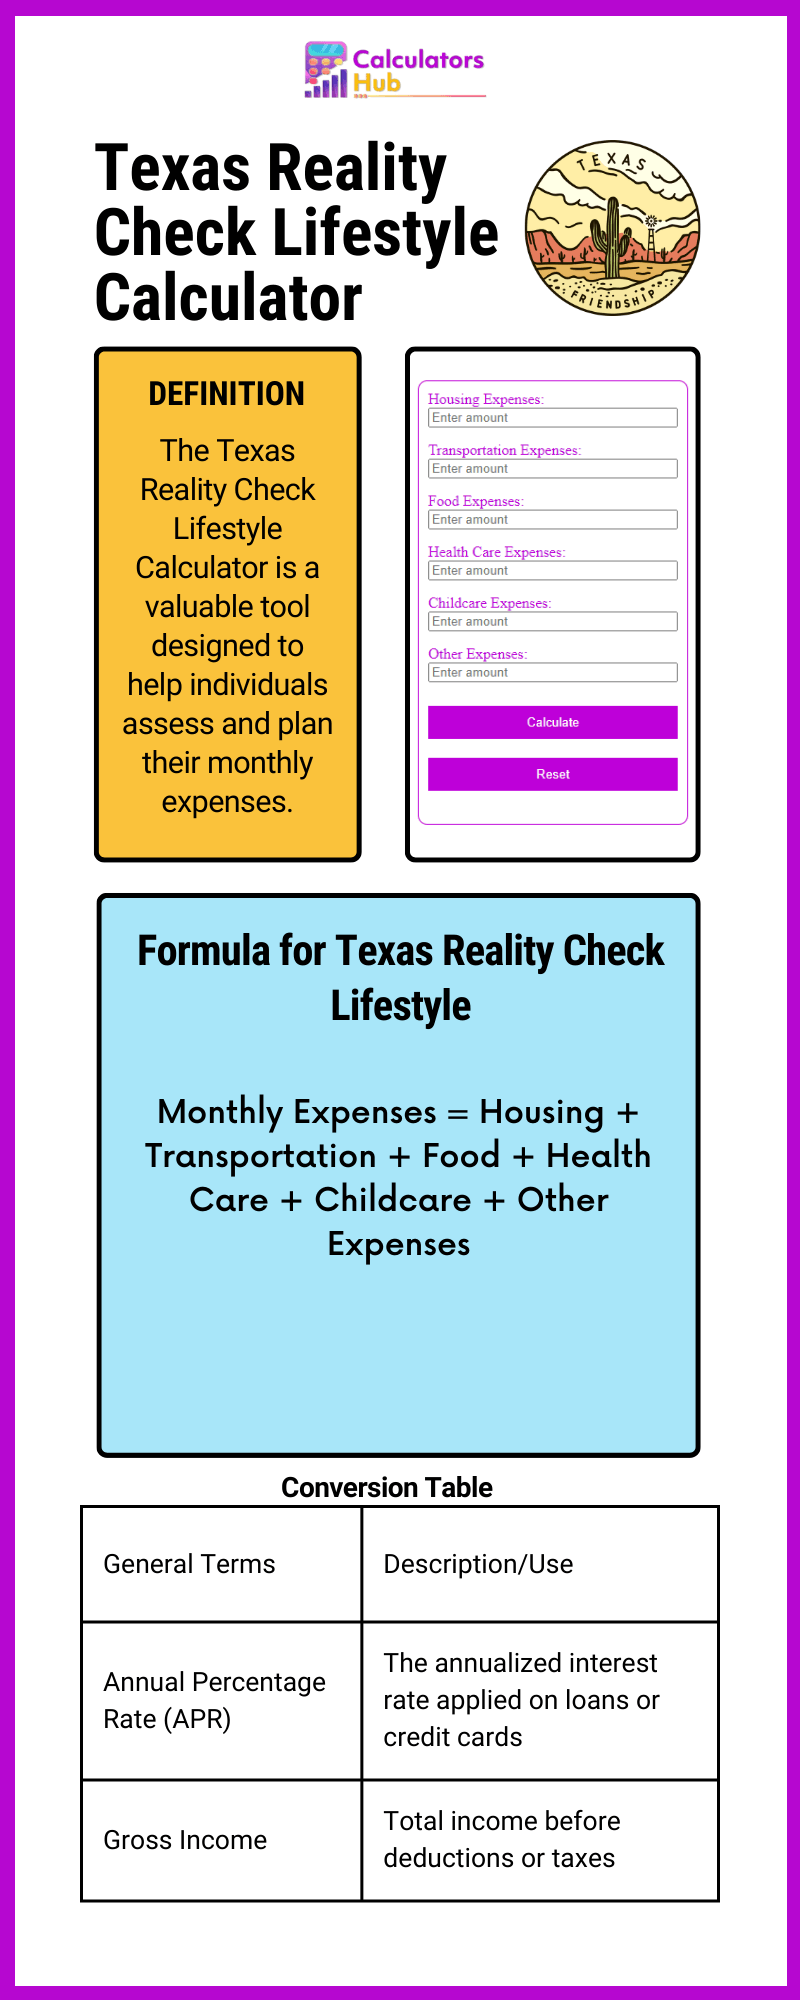 Texas Reality Check Lifestyle Calculator